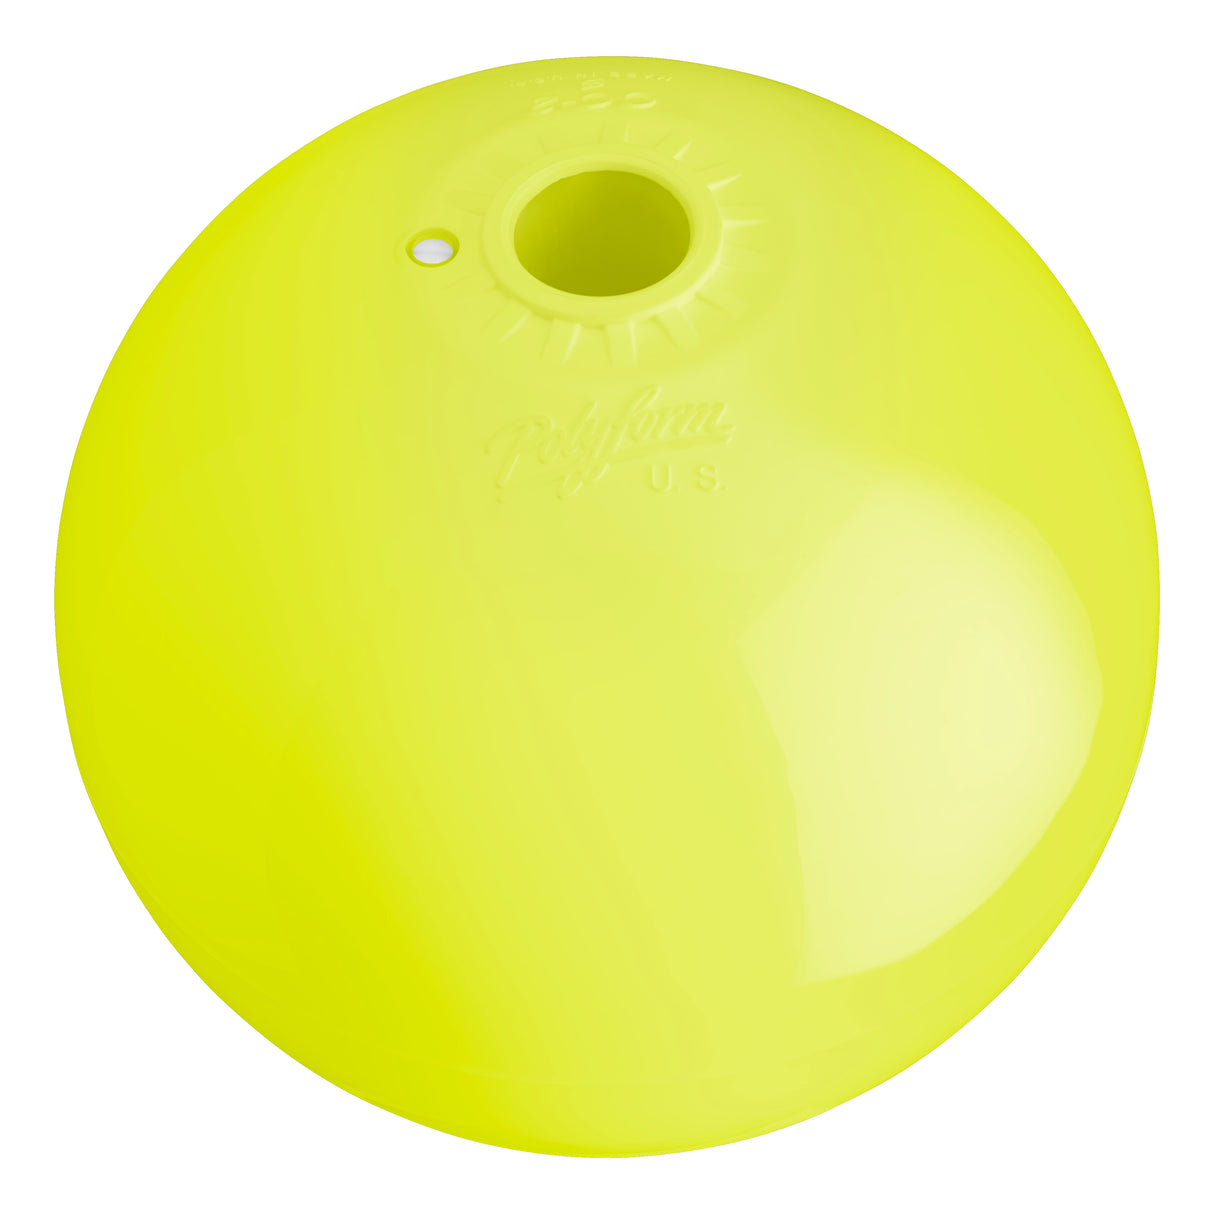 Hole through center mooring and marker buoy, Polyform CC-1 Saturn Yellow angled shot